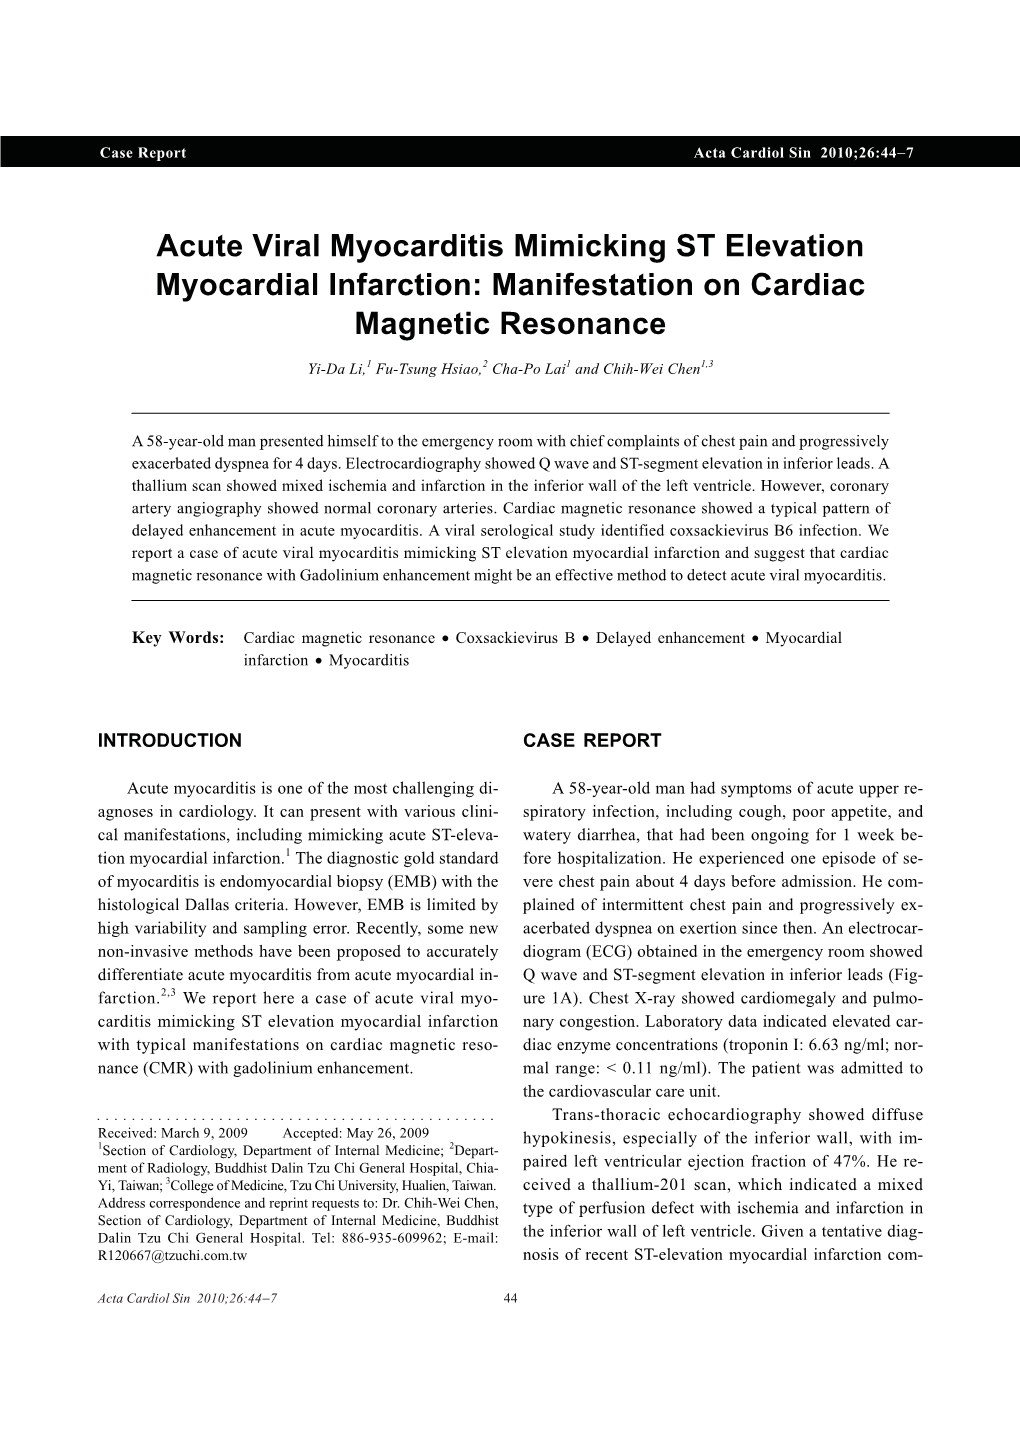 Acute Viral Myocarditis Mimicking ST Elevation Myocardial Infarction: Manifestation on Cardiac Magnetic Resonance